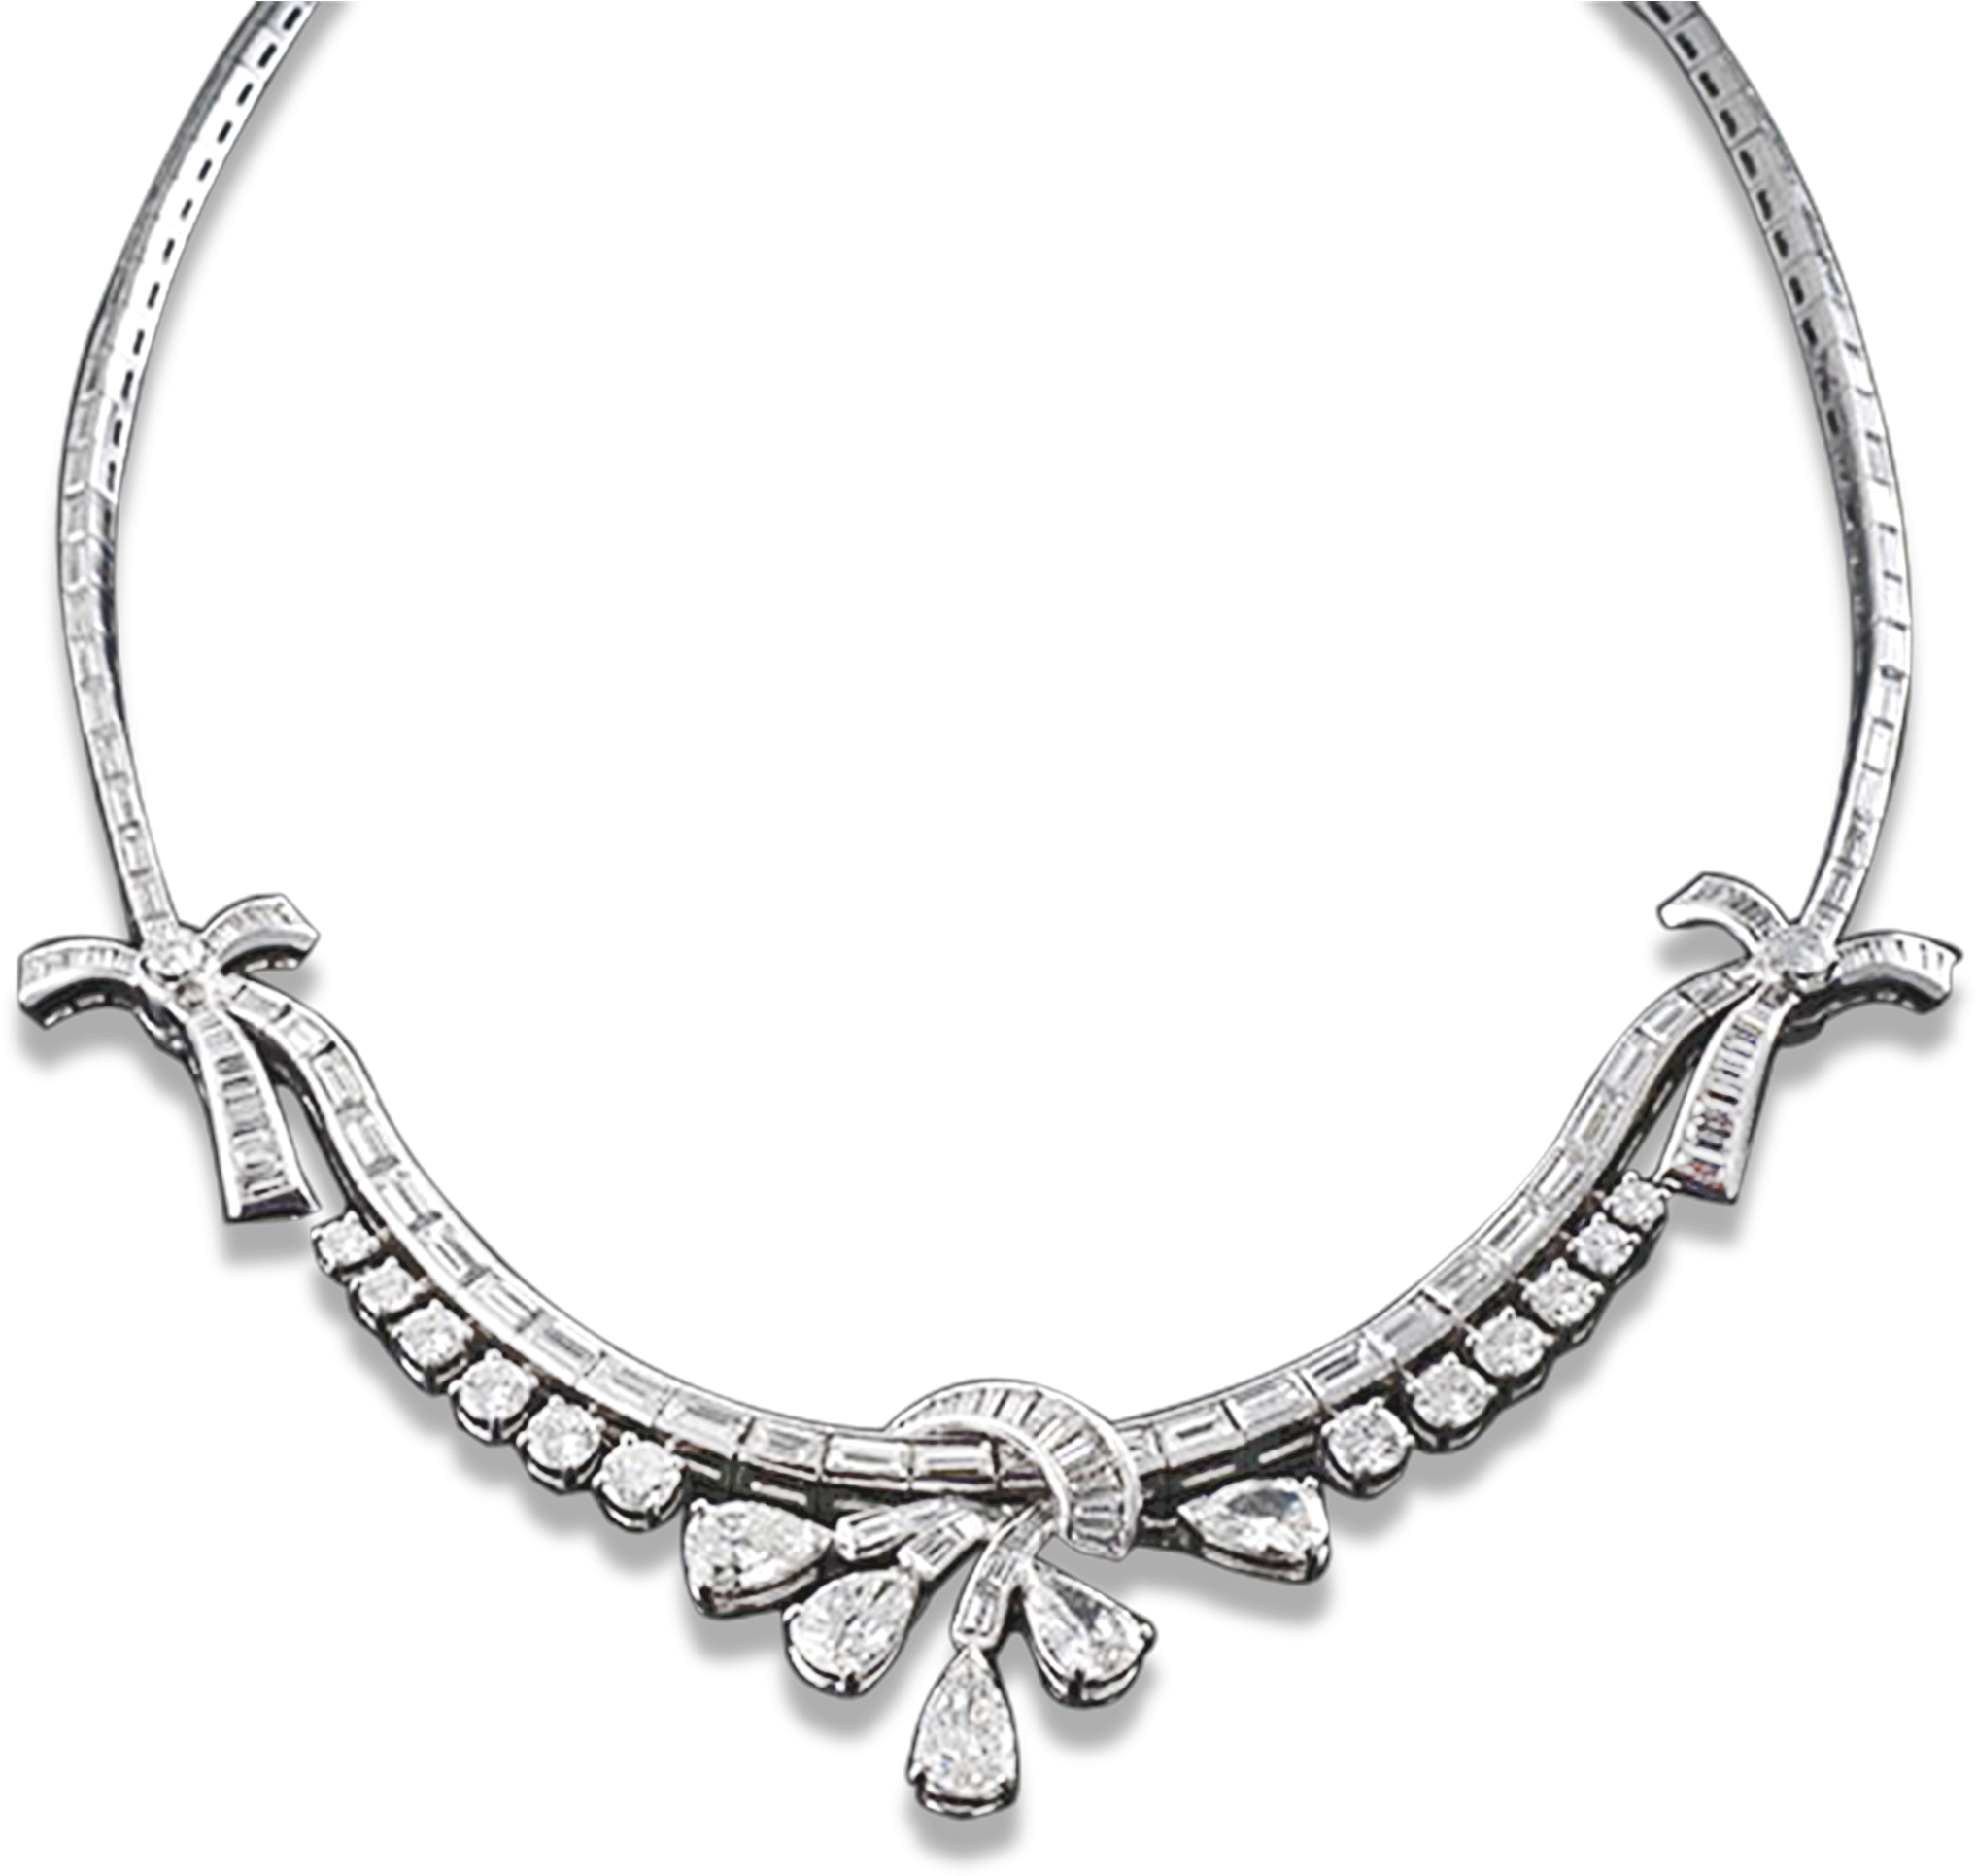 Diamond Necklace Png 2034 X 1931